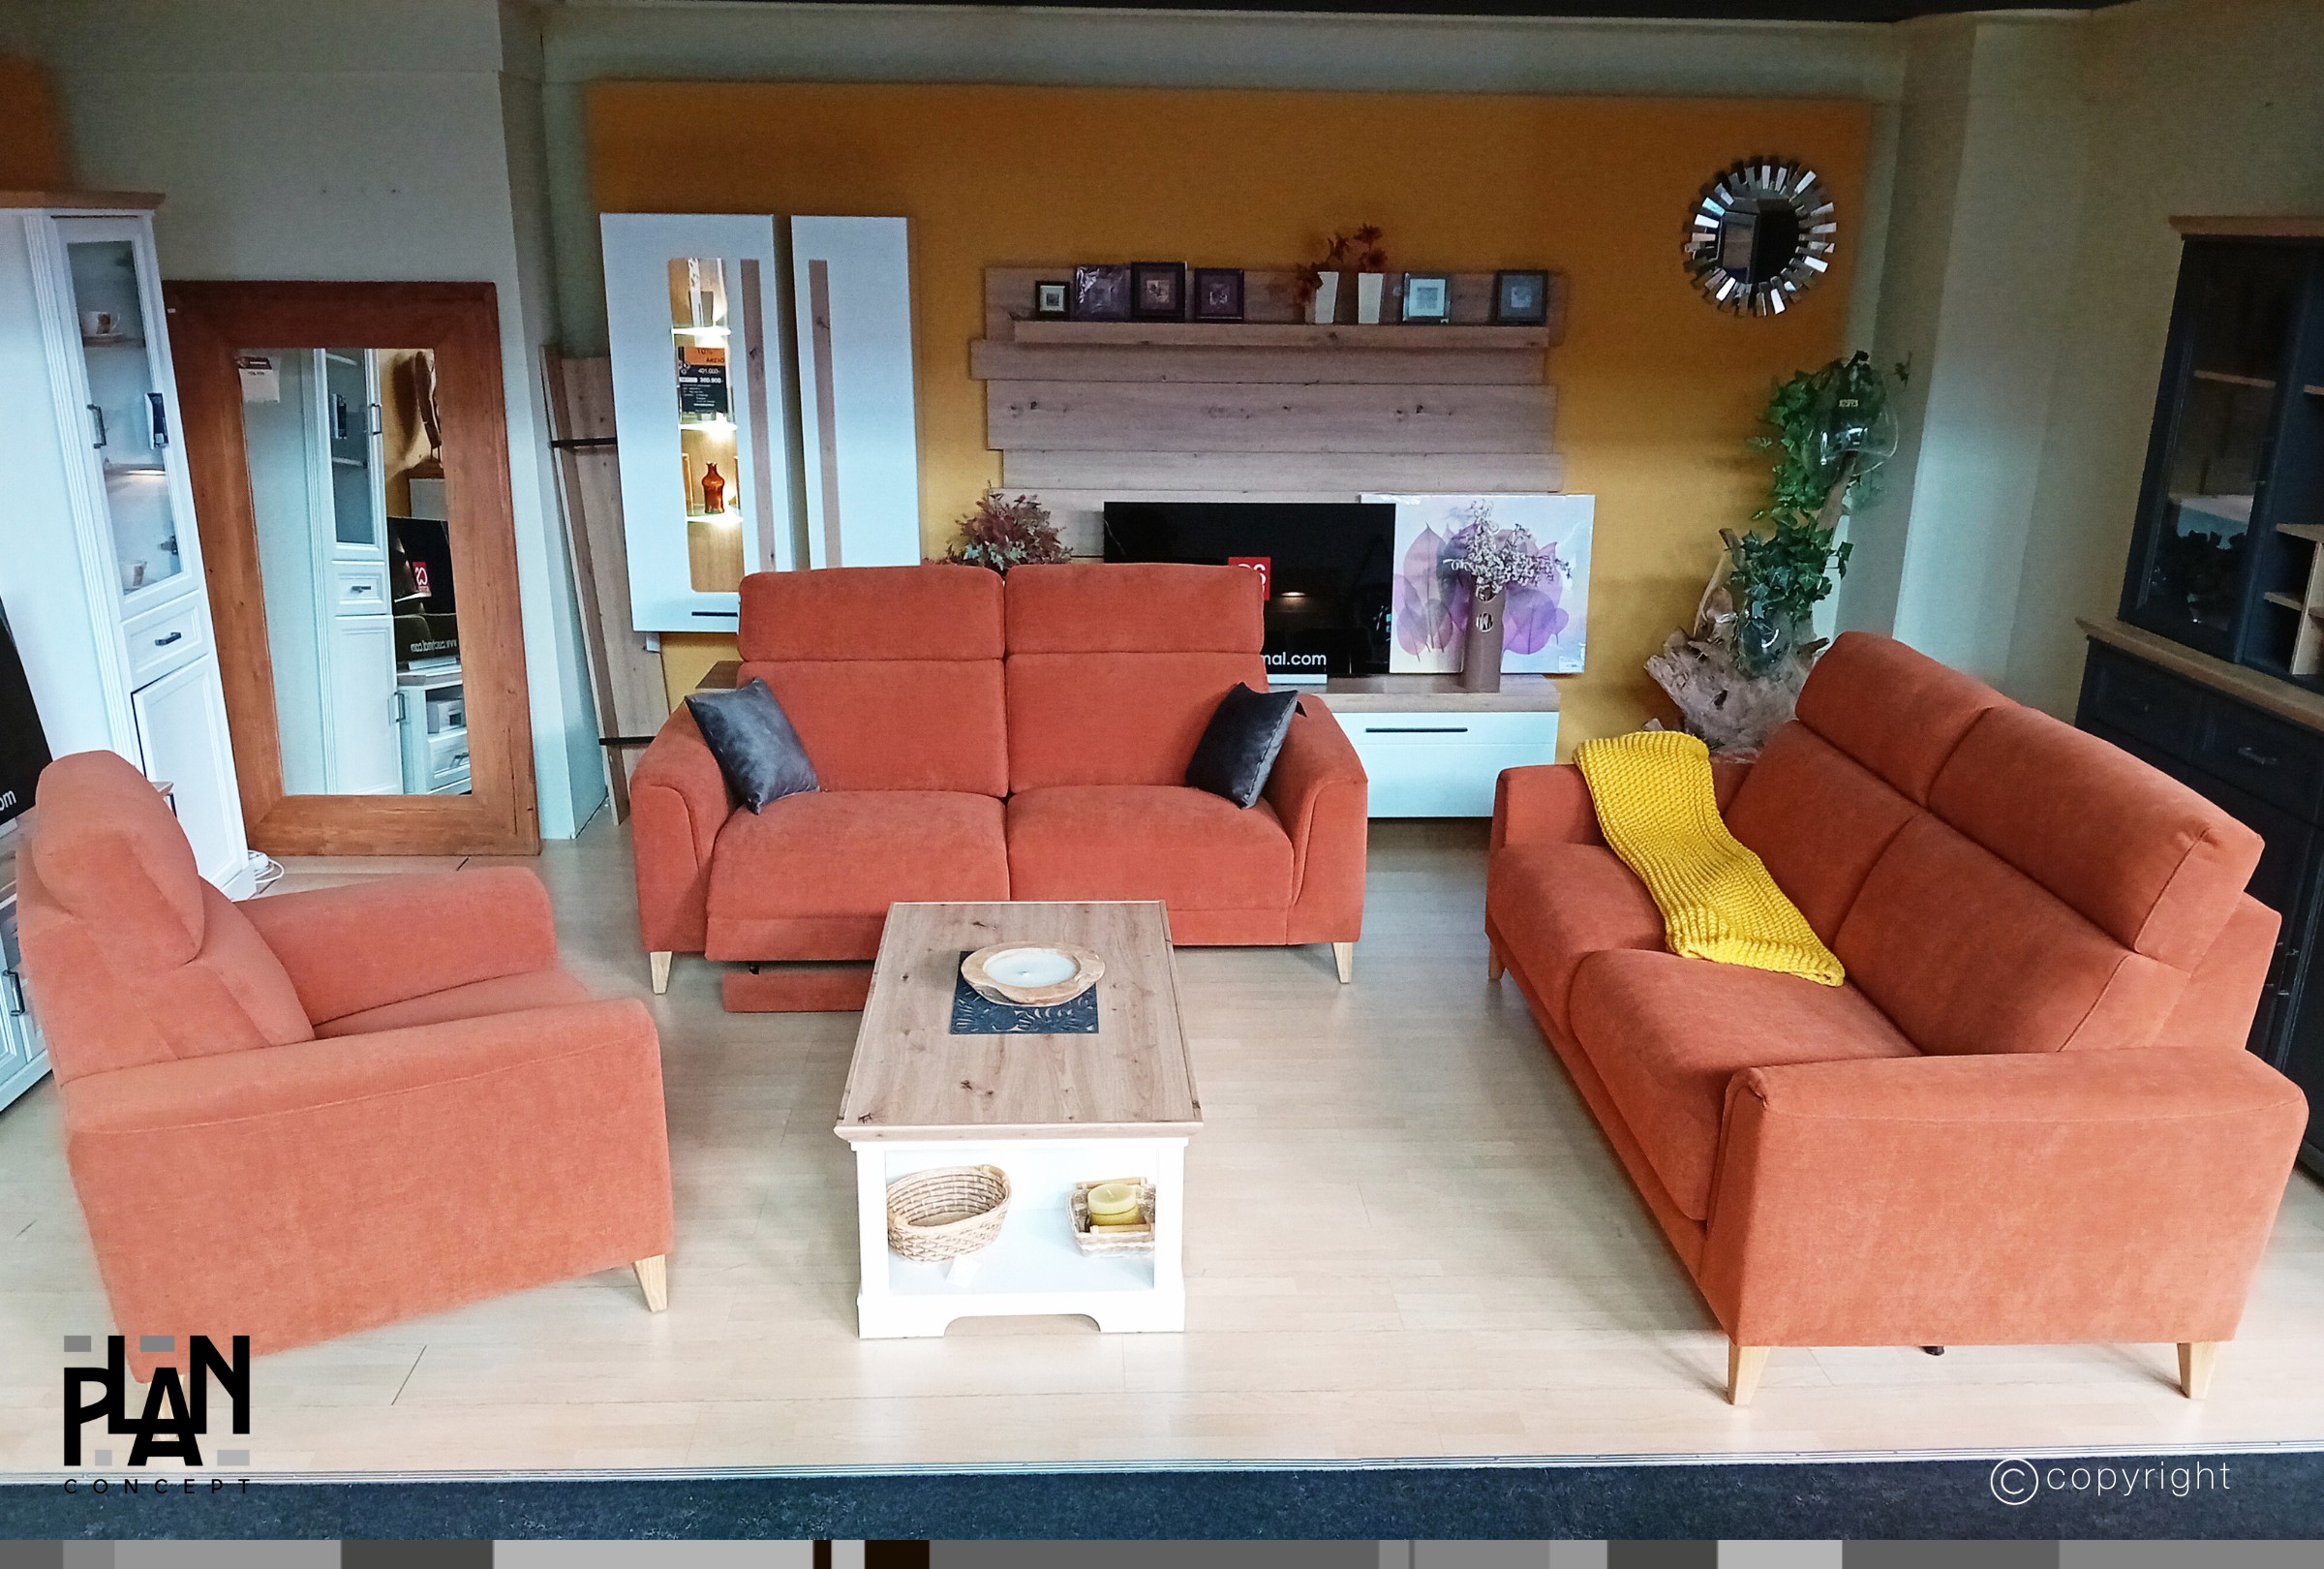 Lieto ülőgarnitúra (sofa, sofa relax, fotel)